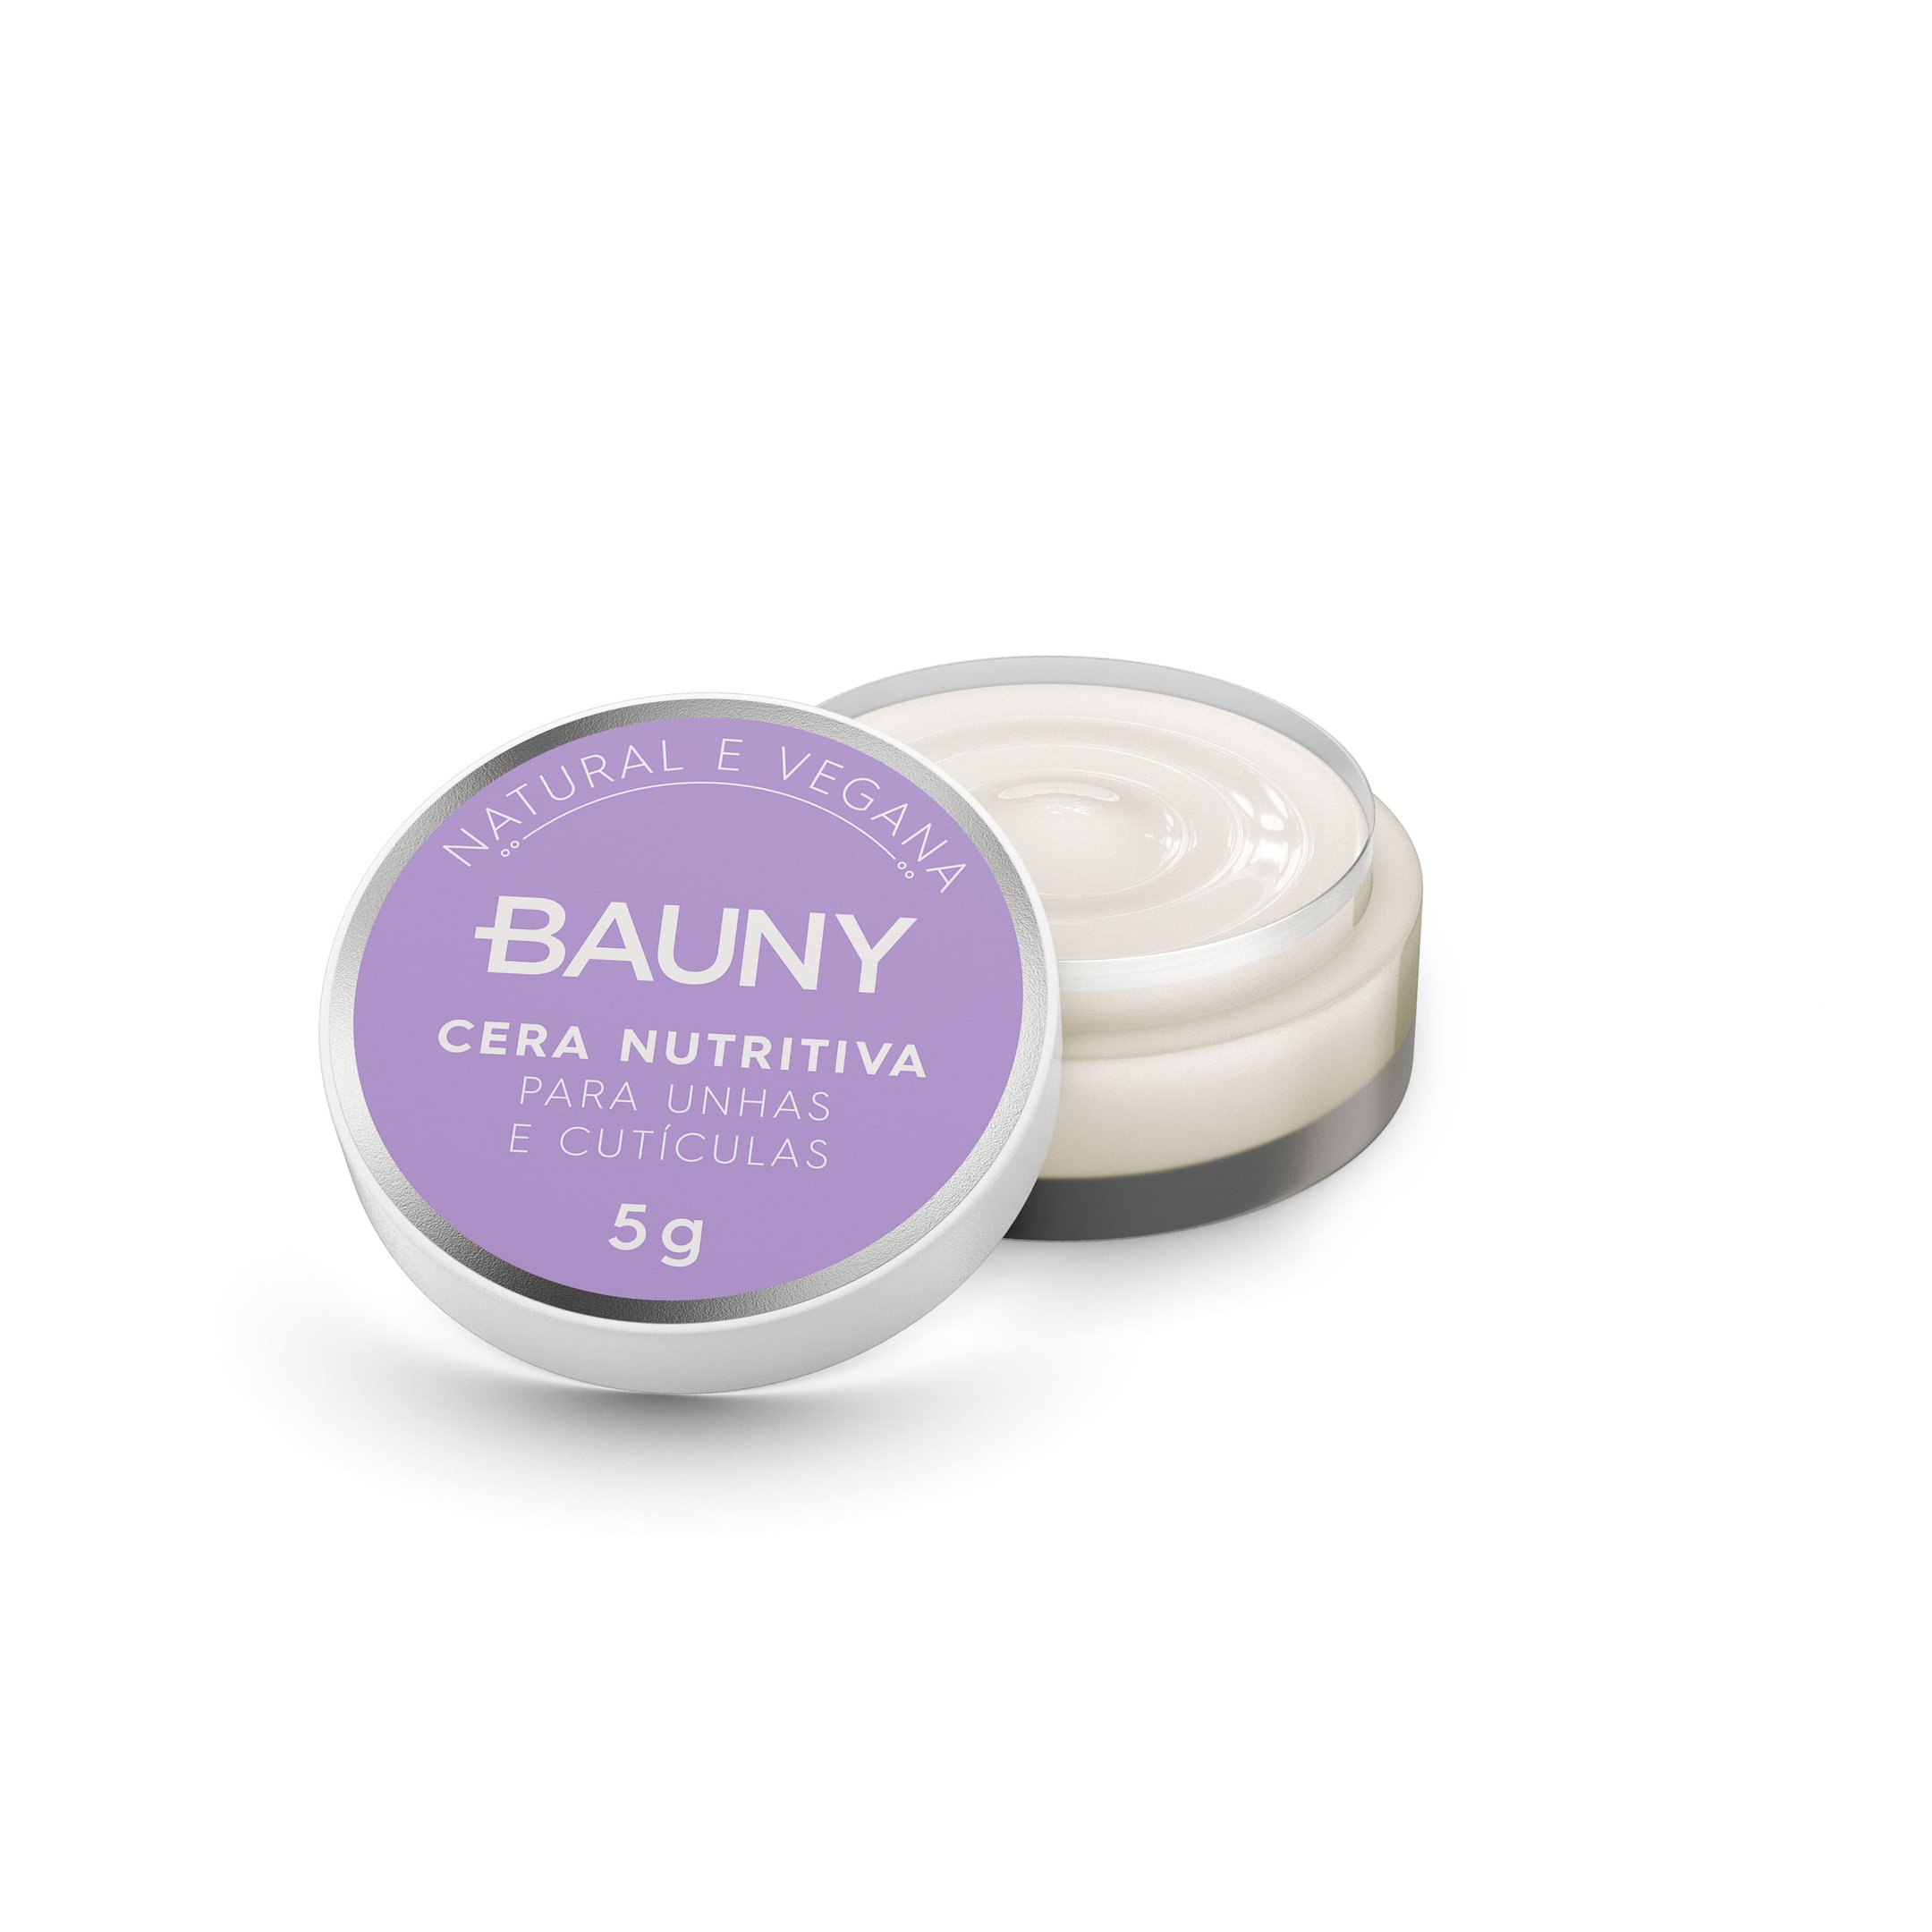 Bauny - Cera Nutritiva Para Unhas e Cutículas - 5g